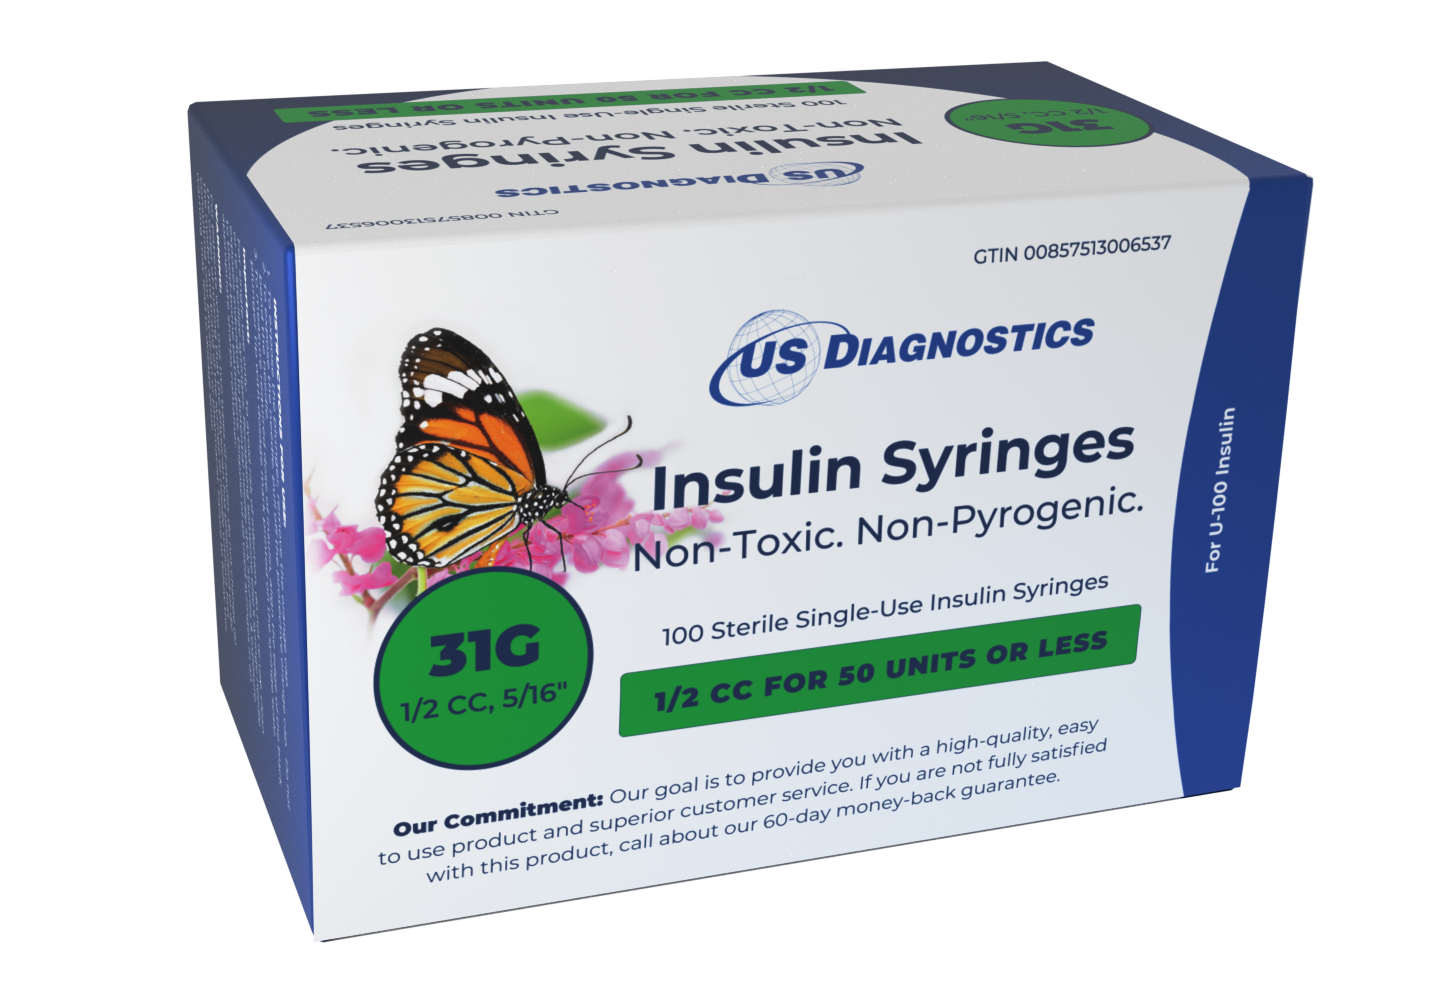 Insulin Syringes 31G, 1/2cc, 5/16", 100/box